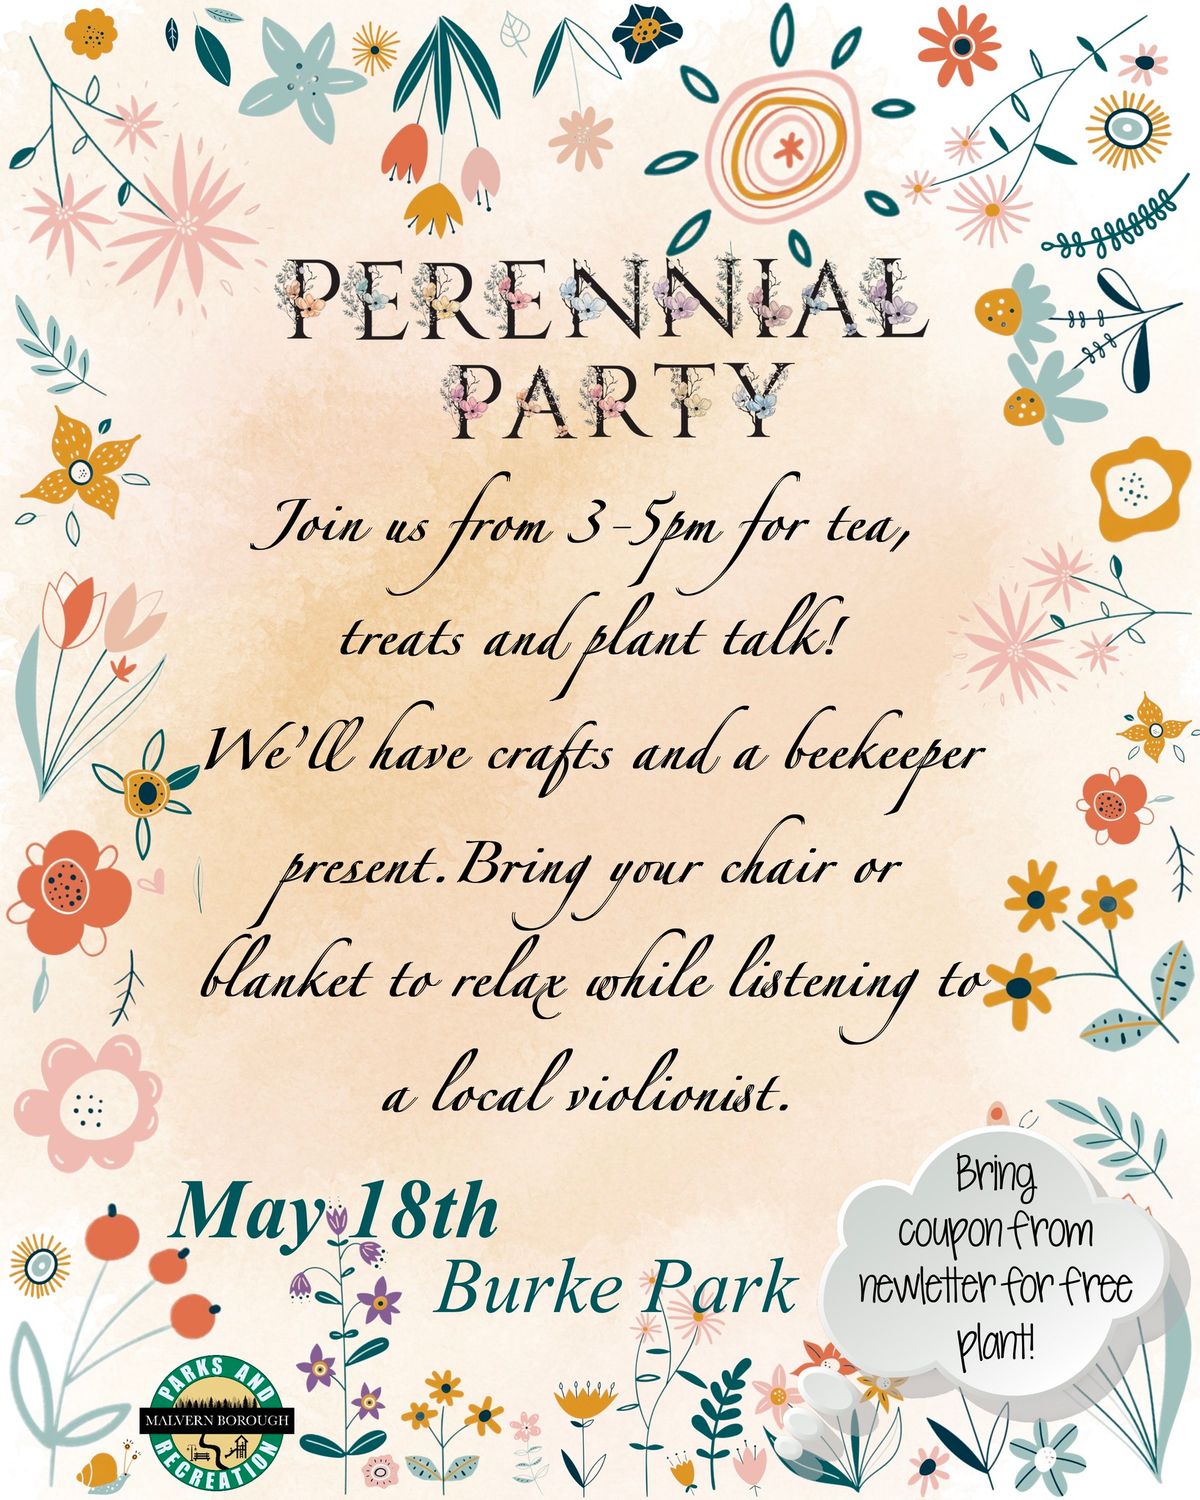 Perennial Party